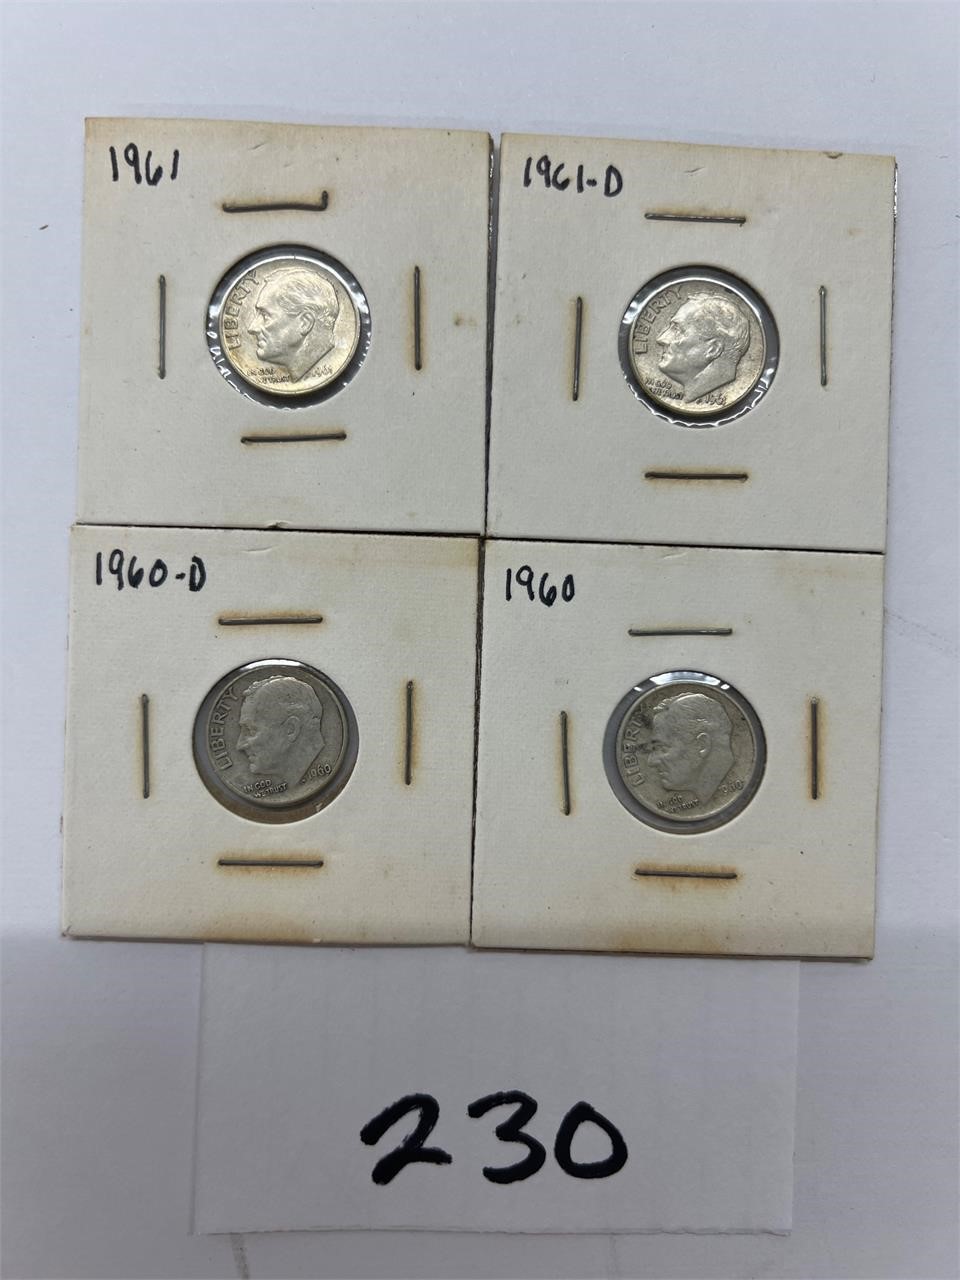 4 Roosevelt silver dimes 1960 1960D 1961 1961D